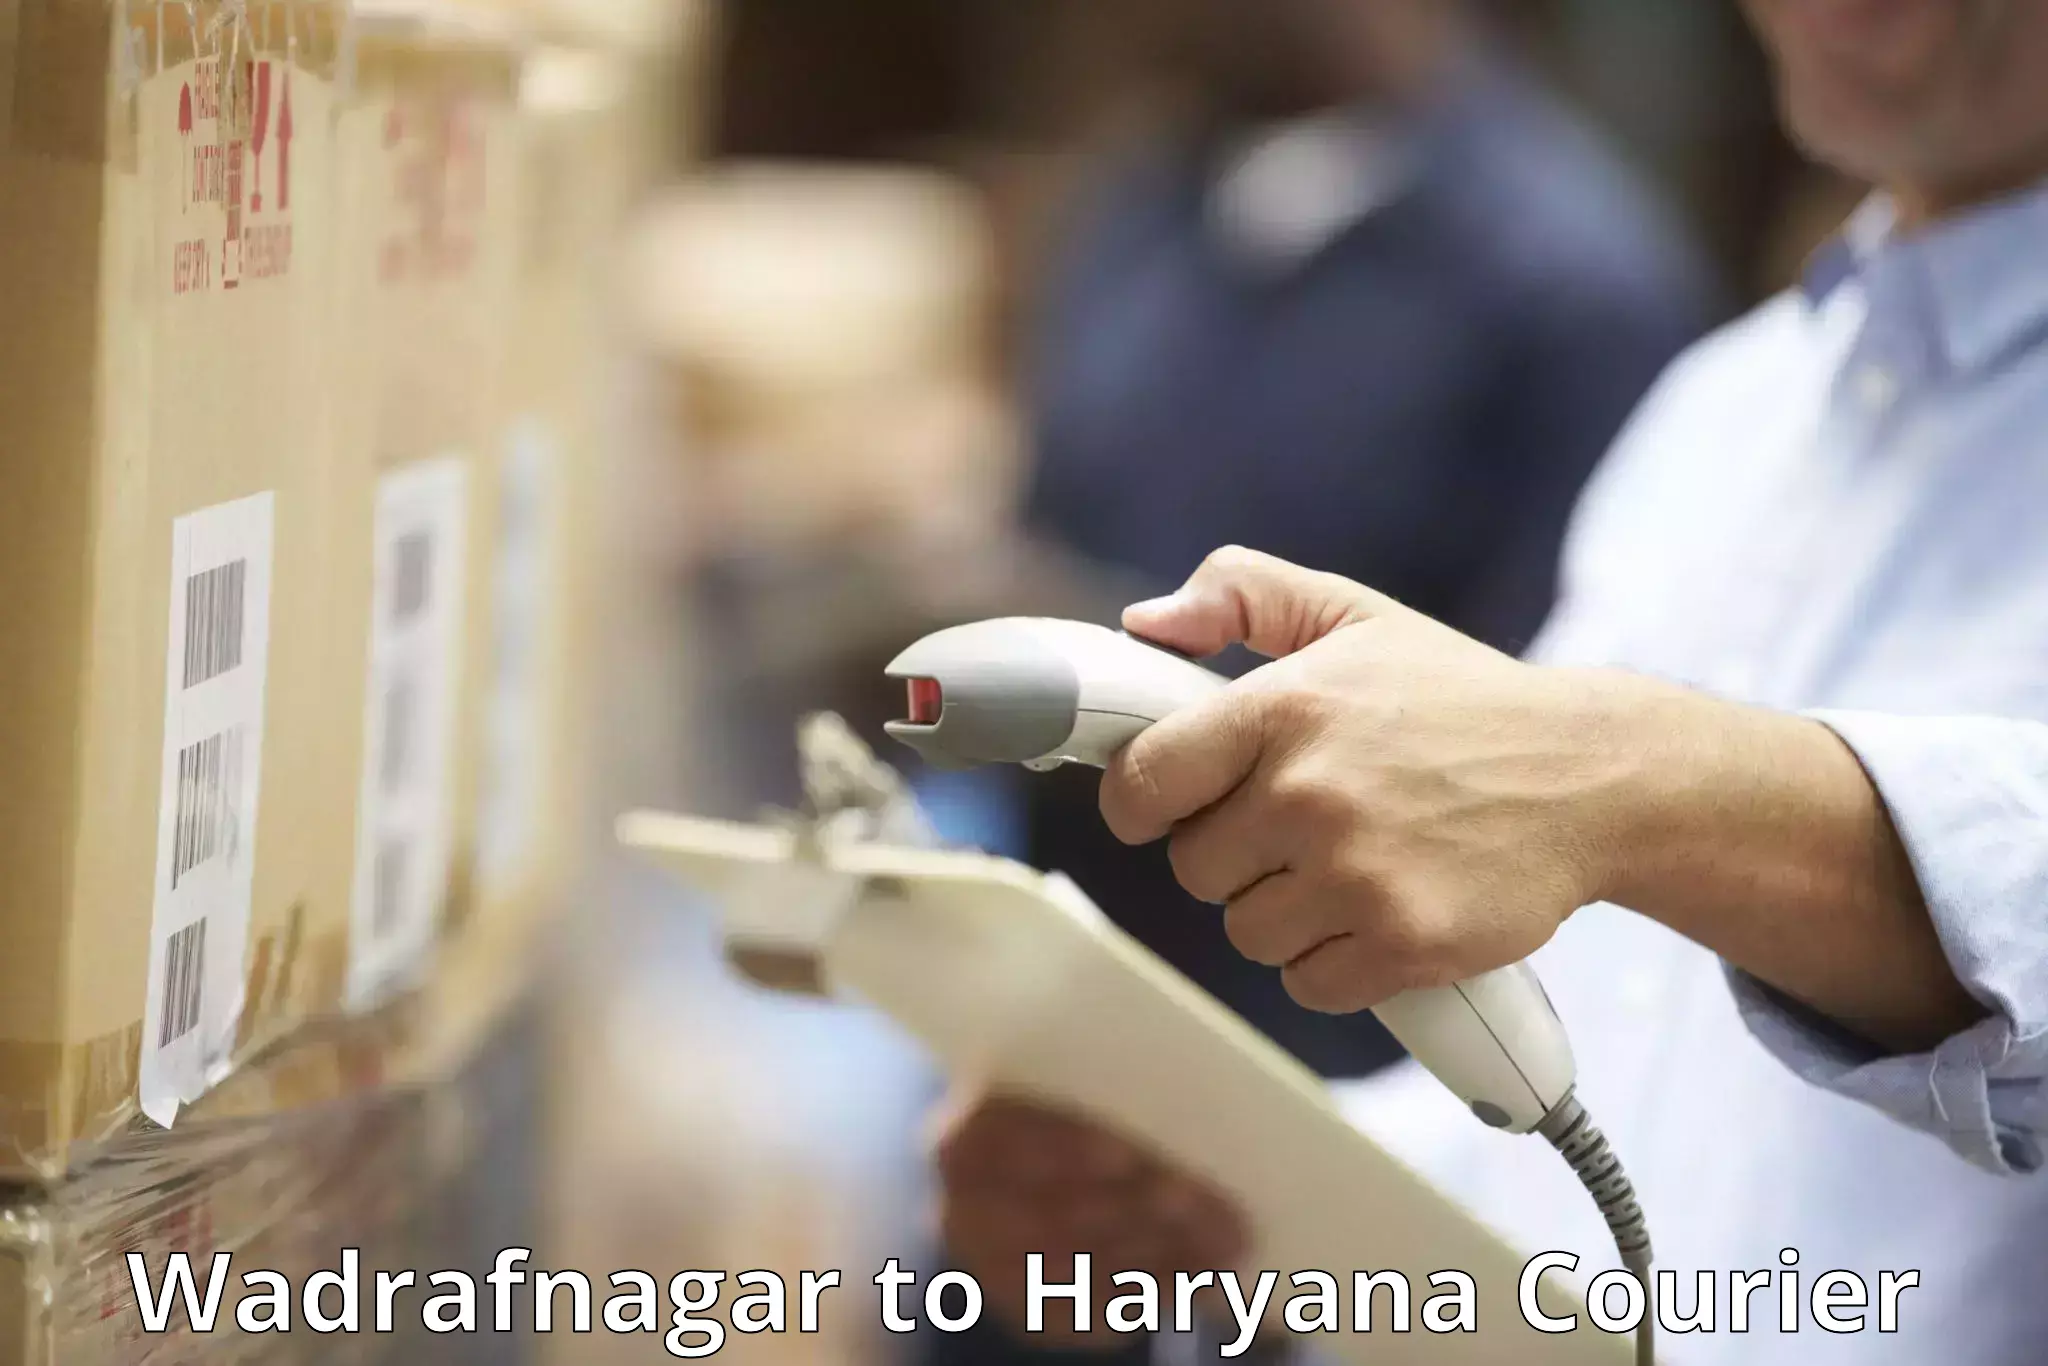 Baggage transport technology Wadrafnagar to Haryana